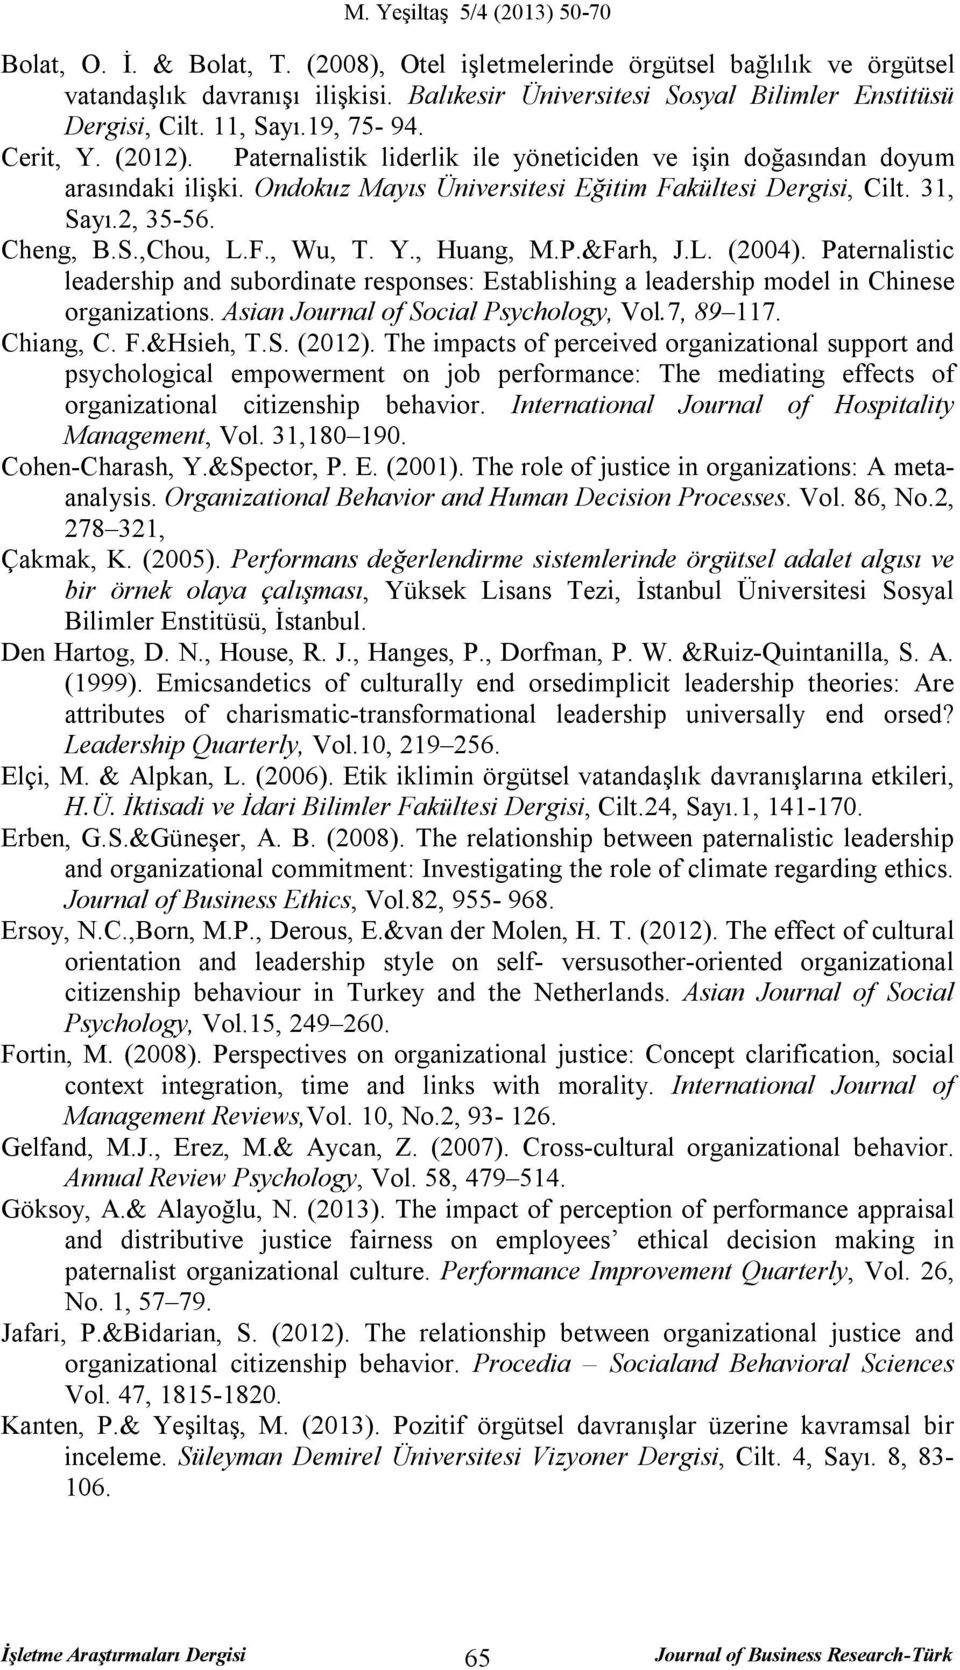 F., Wu, T. Y., Huang, M.P.&Farh, J.L. (2004). Paternalistic leadership and subordinate responses: Establishing a leadership model in Chinese organizations. Asian Journal of Social Psychology, Vol.